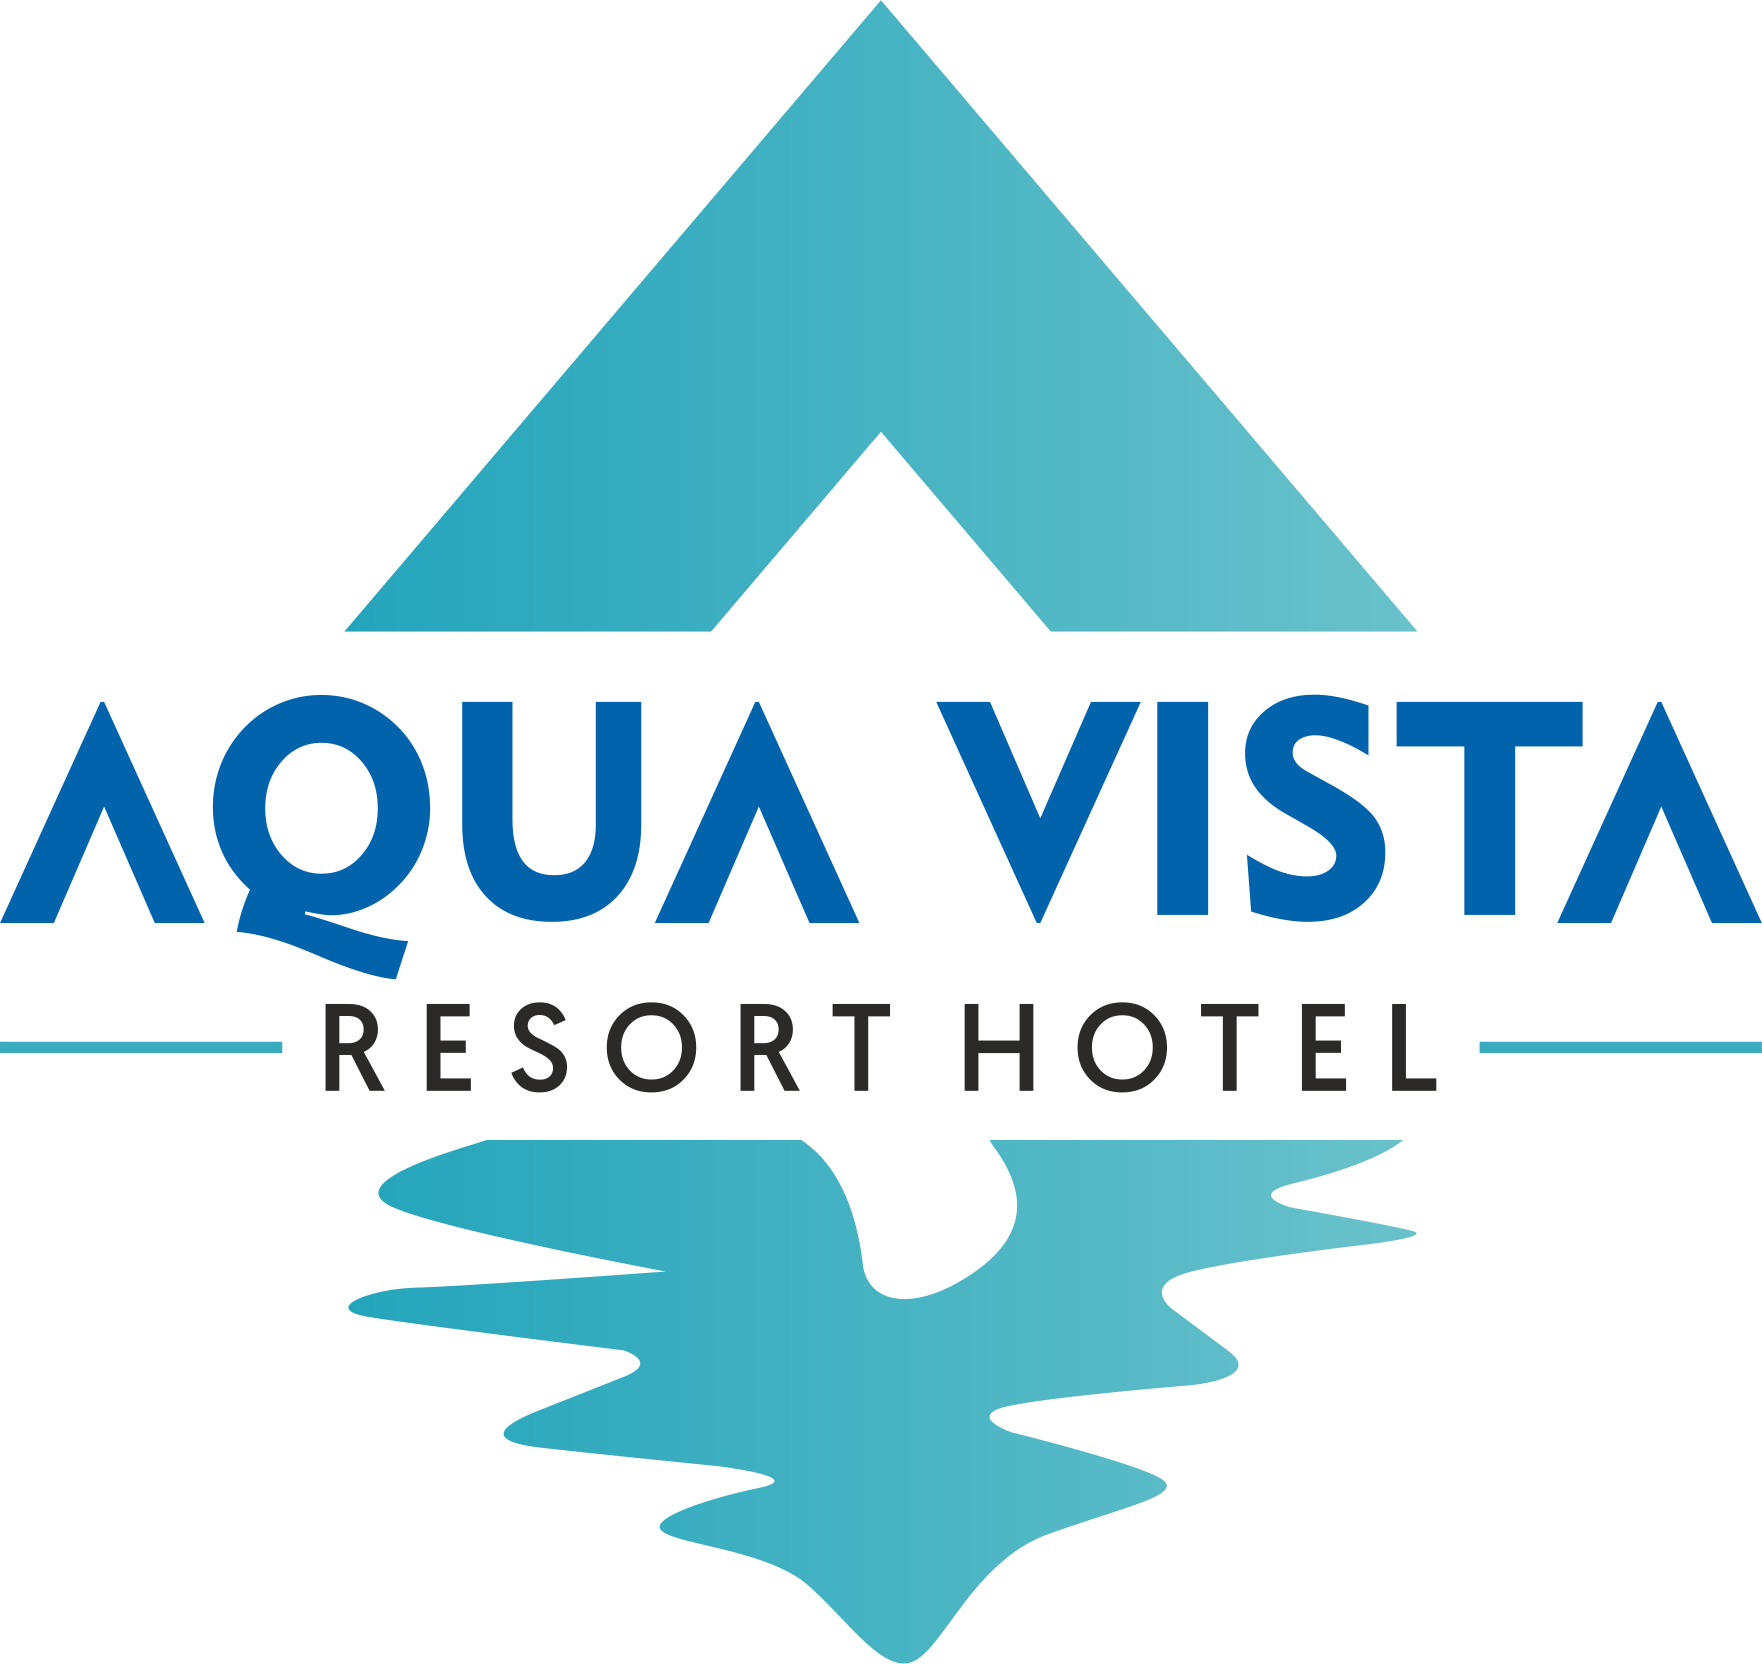 aqua vista resort hotel logo